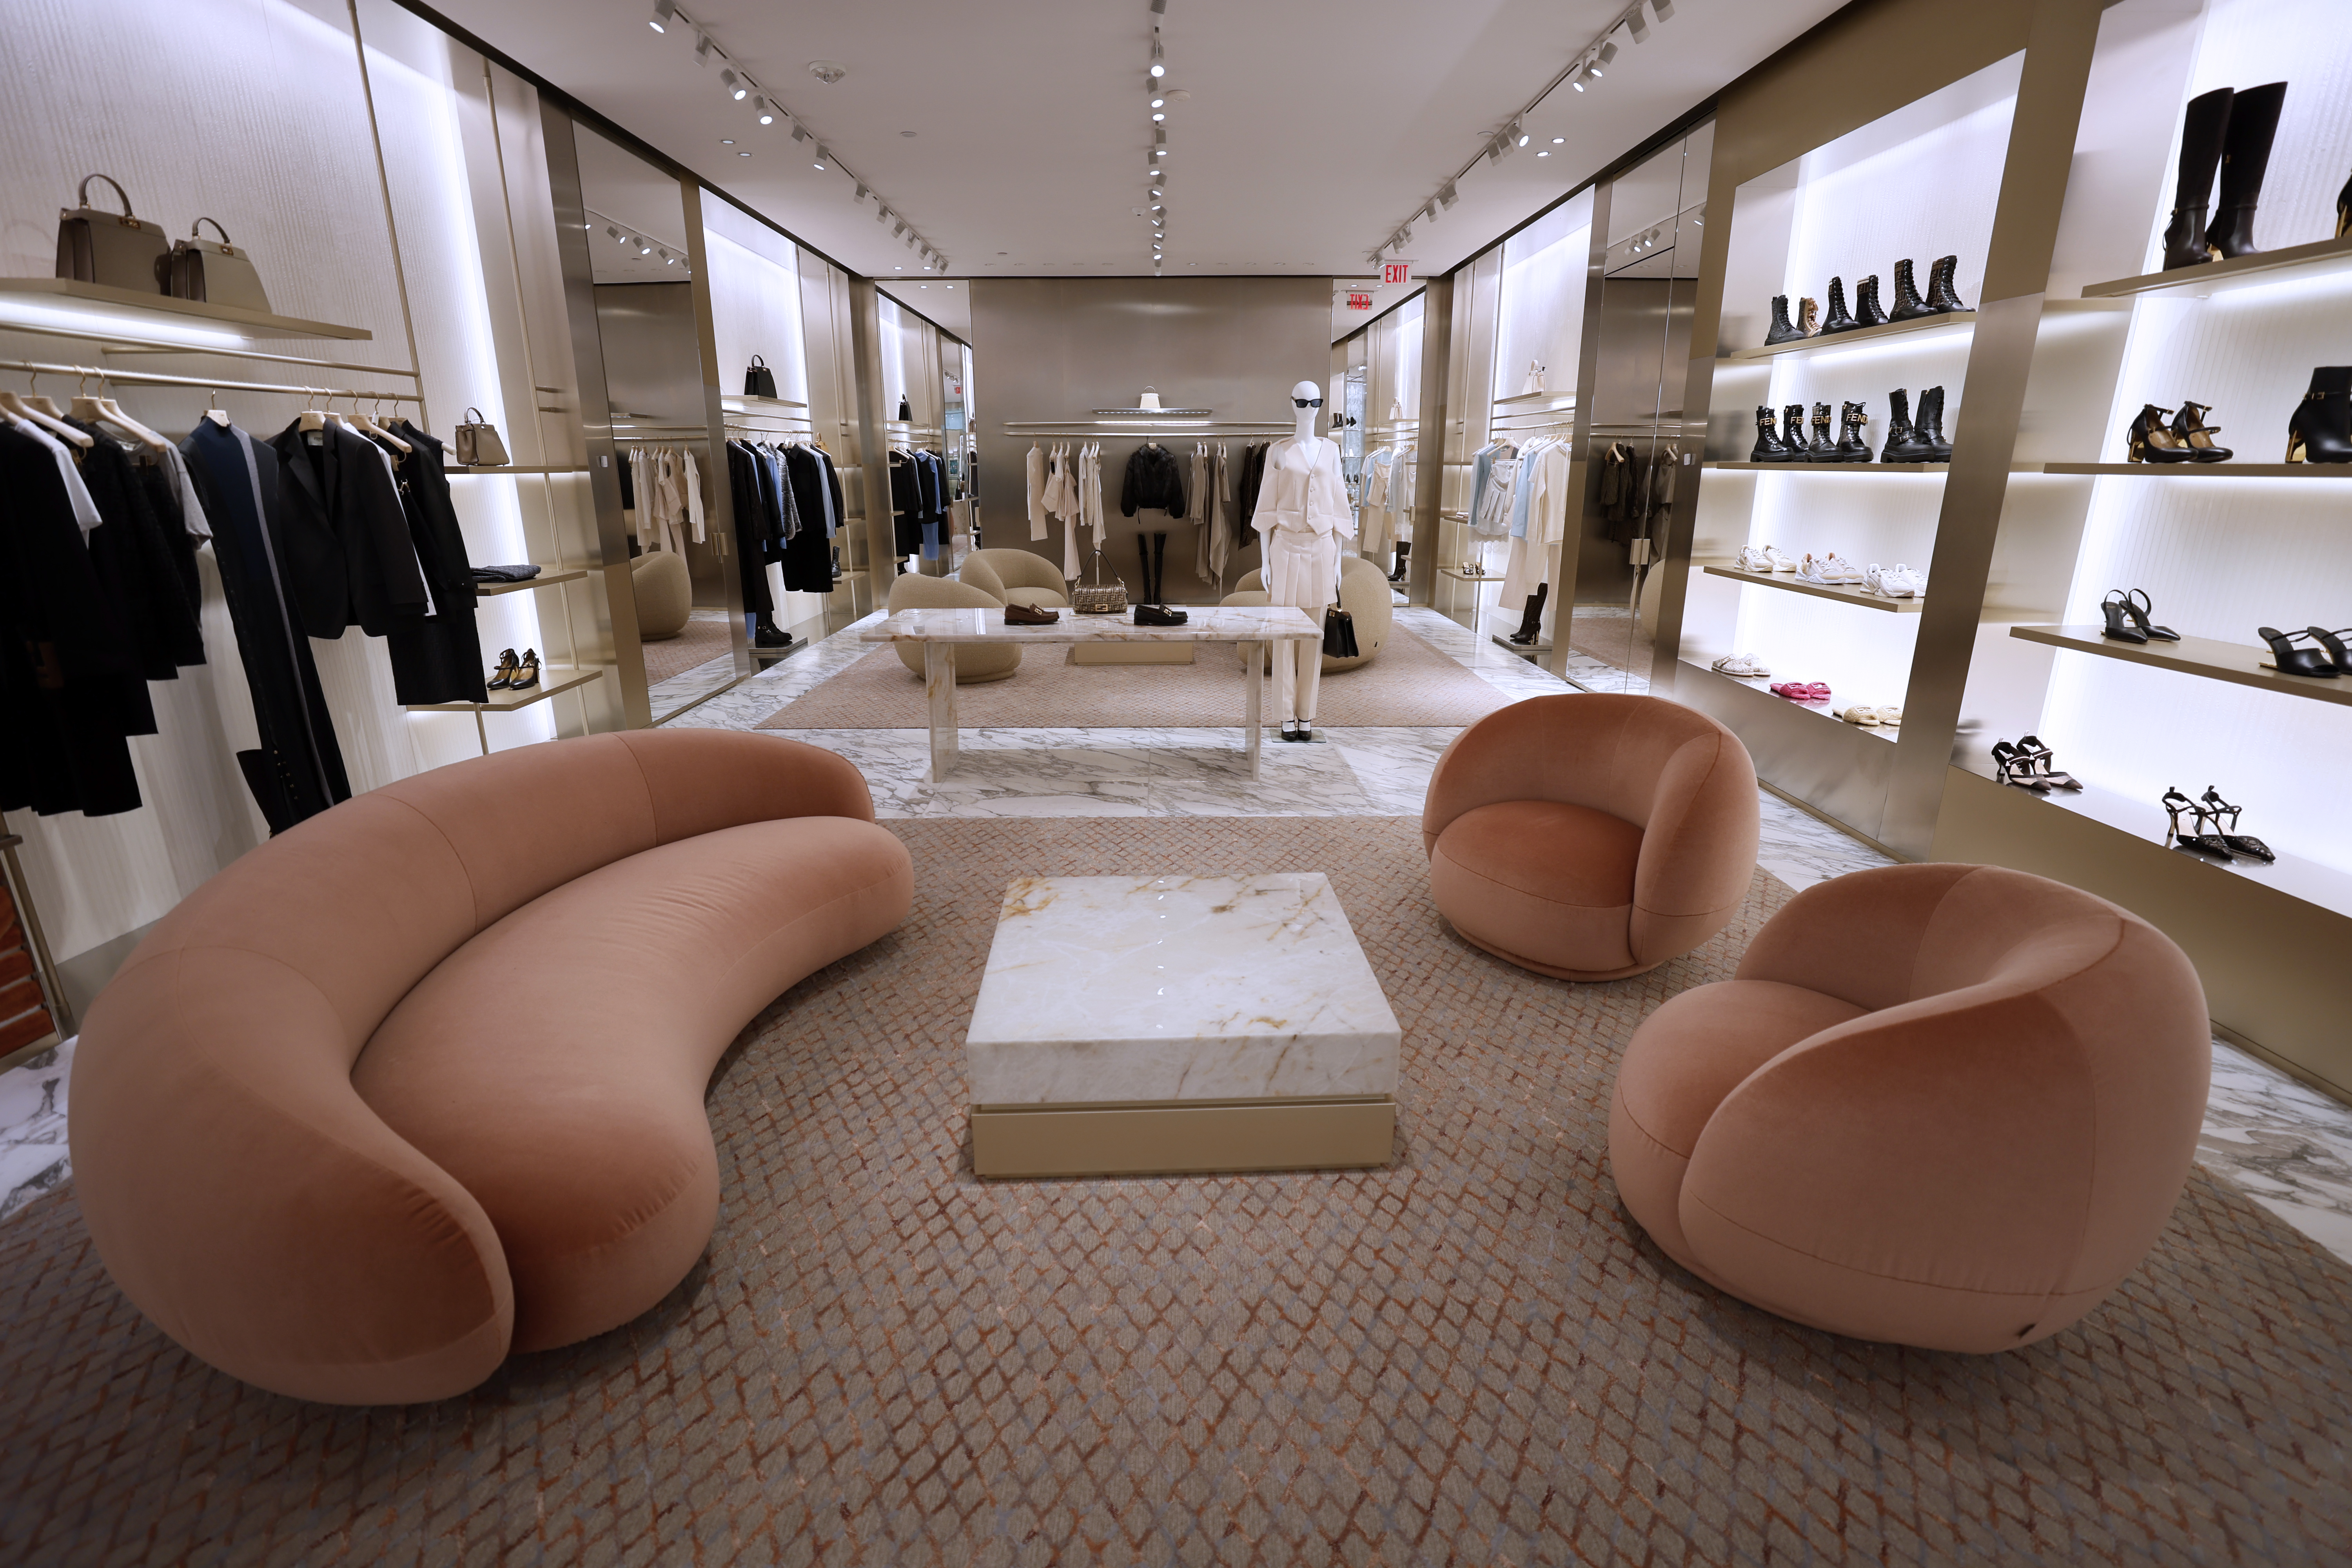 Louis Vuitton expands at Lenox - Atlanta Business Chronicle